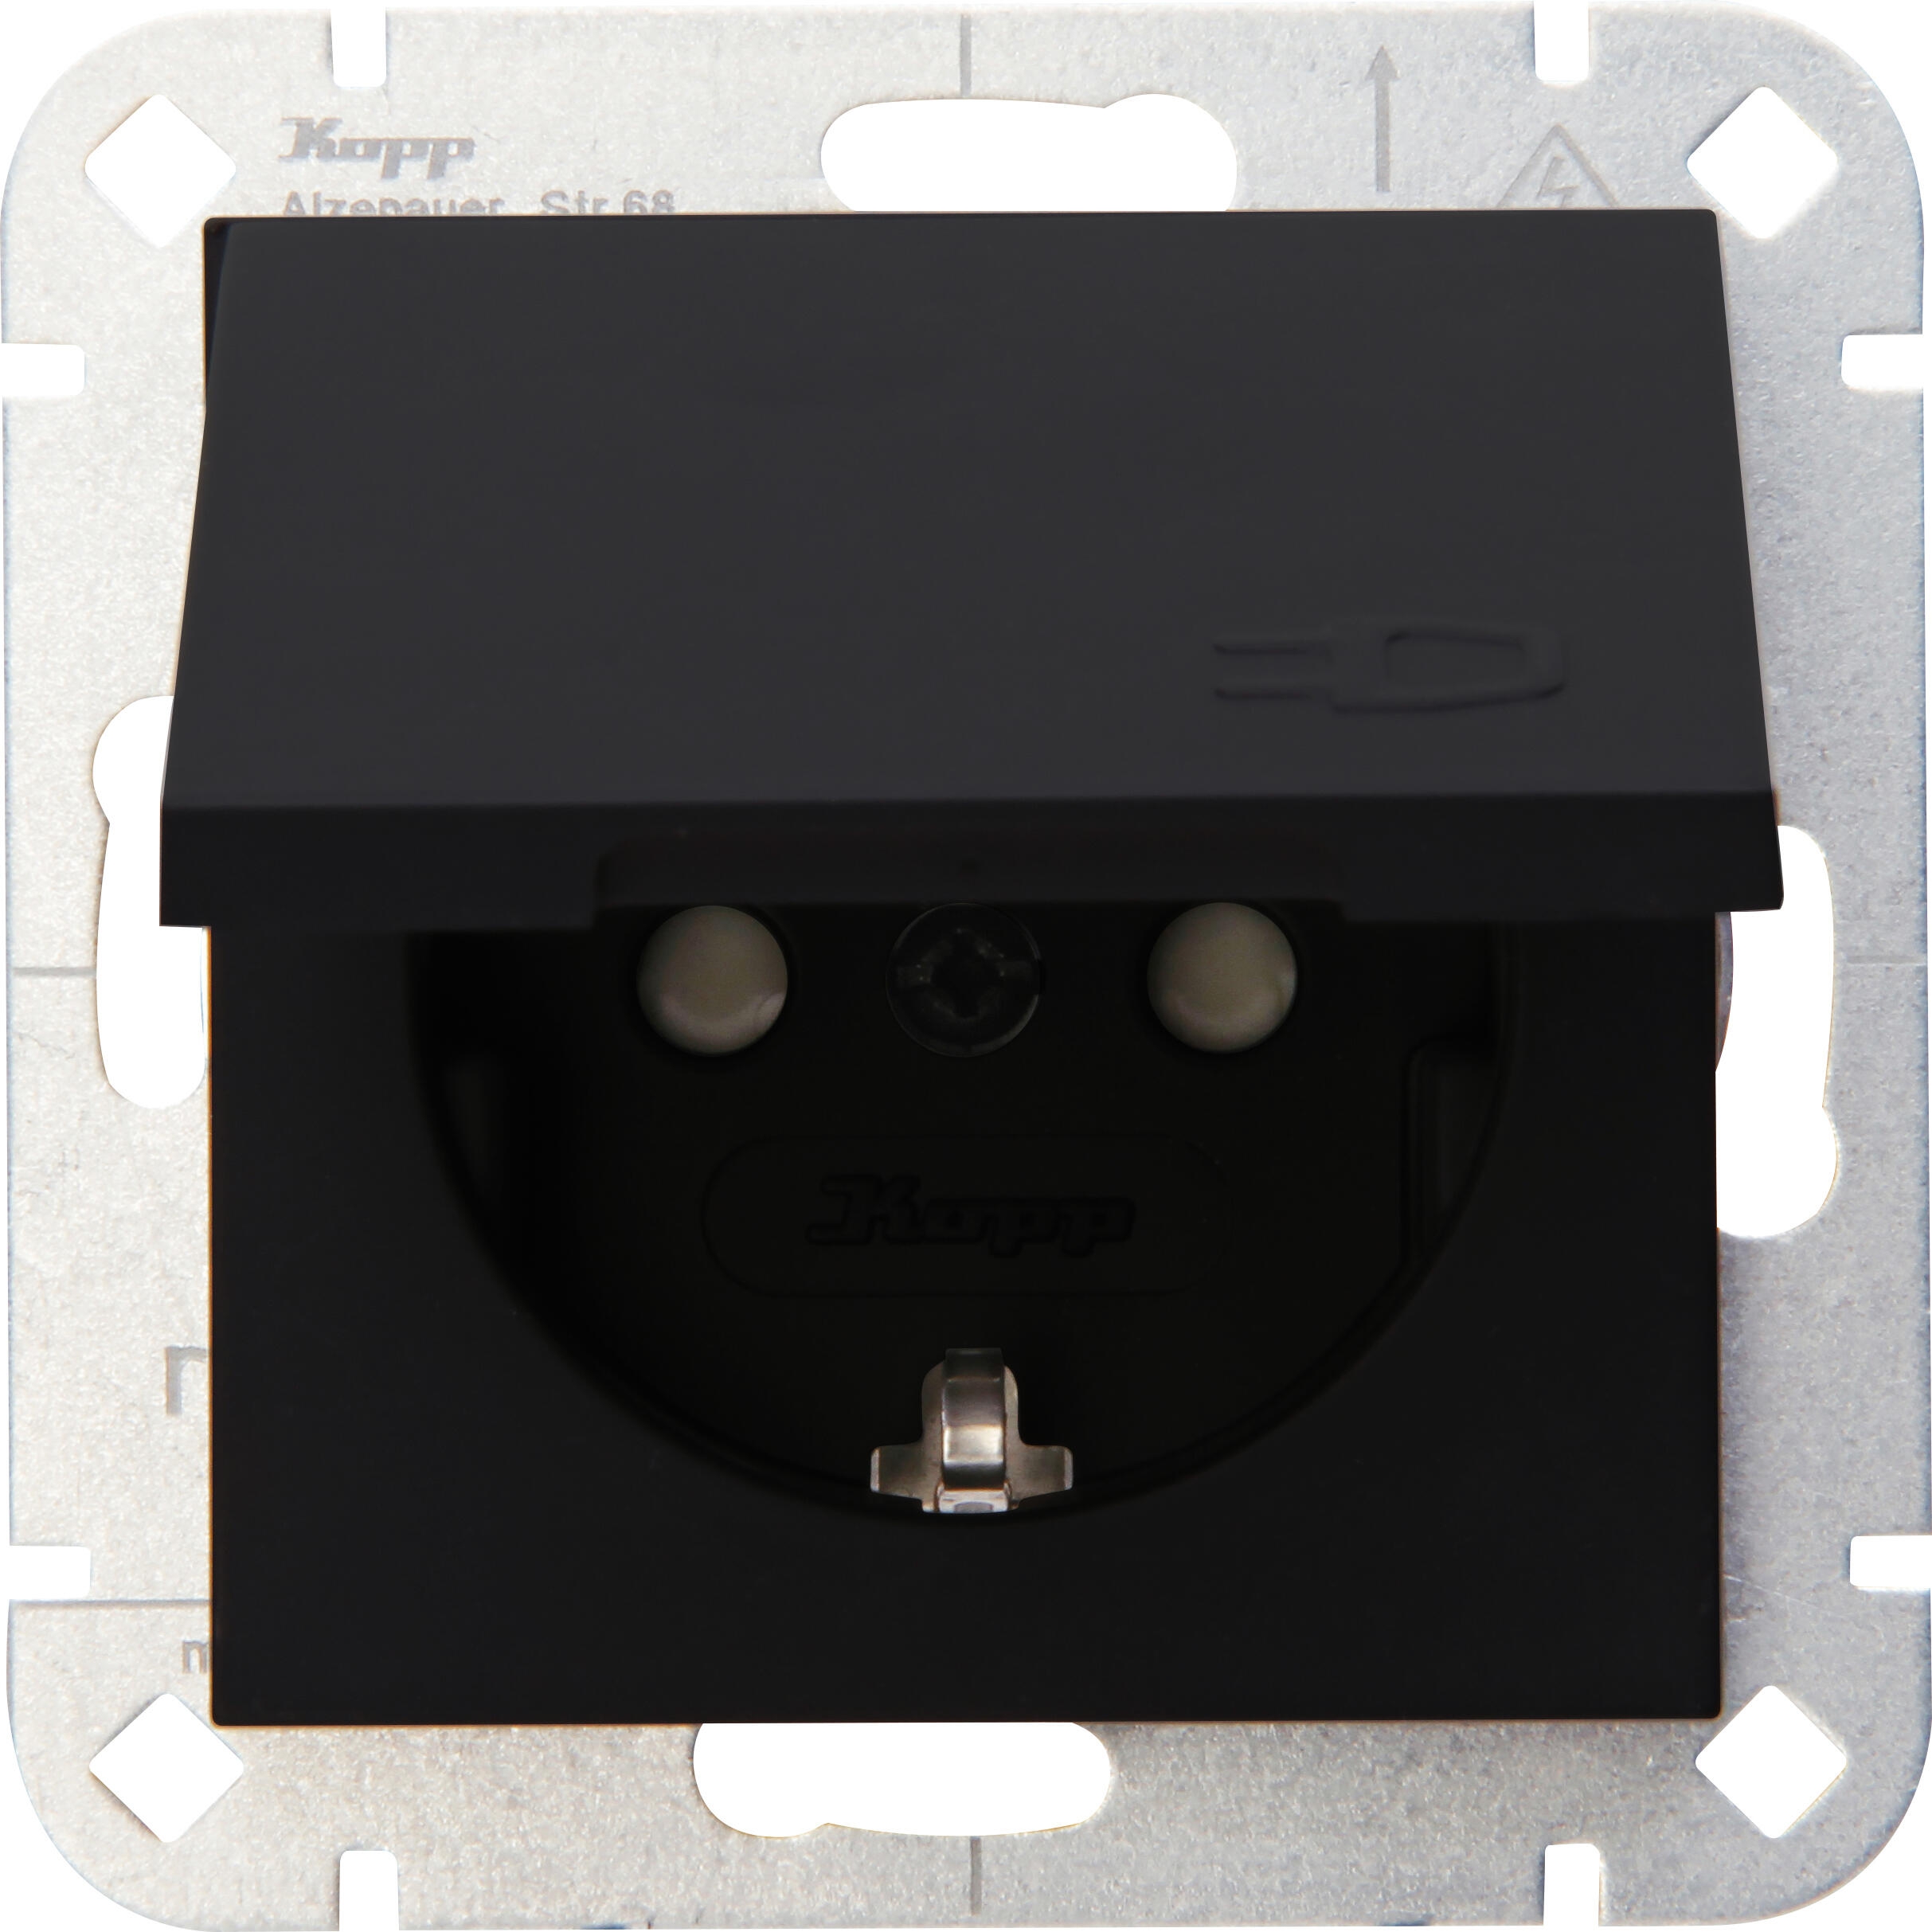 Kopp 940150003 HK07 - Schutzkontakt-Steckdose, Klappdeckel, erhöhter Berührungsschutz, Farbe: schwarz matt